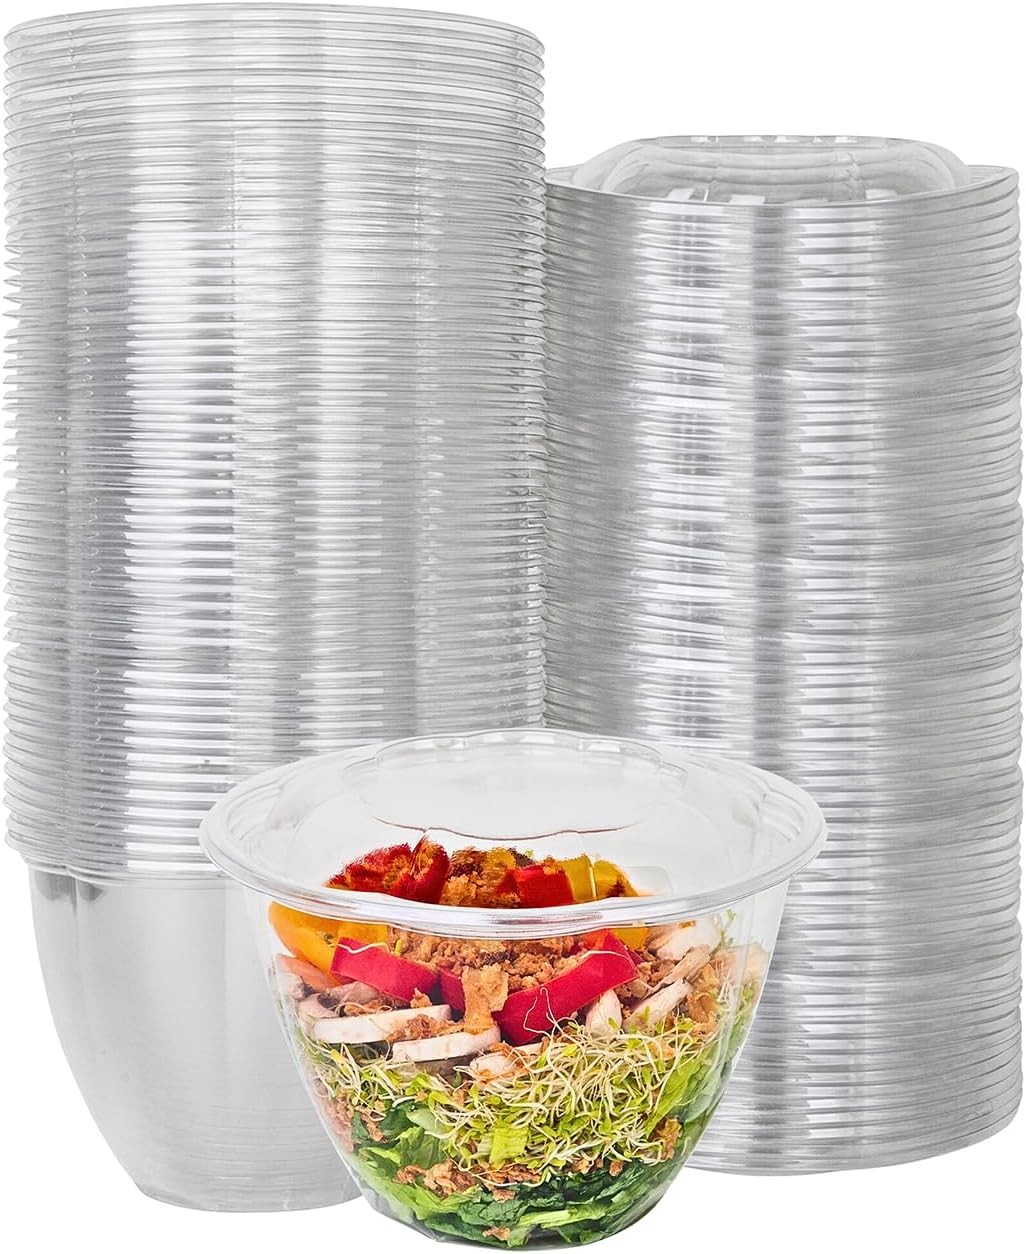 48 oz. Plastic Salad Bowls to Go with Airtight Lids [50 Sets]